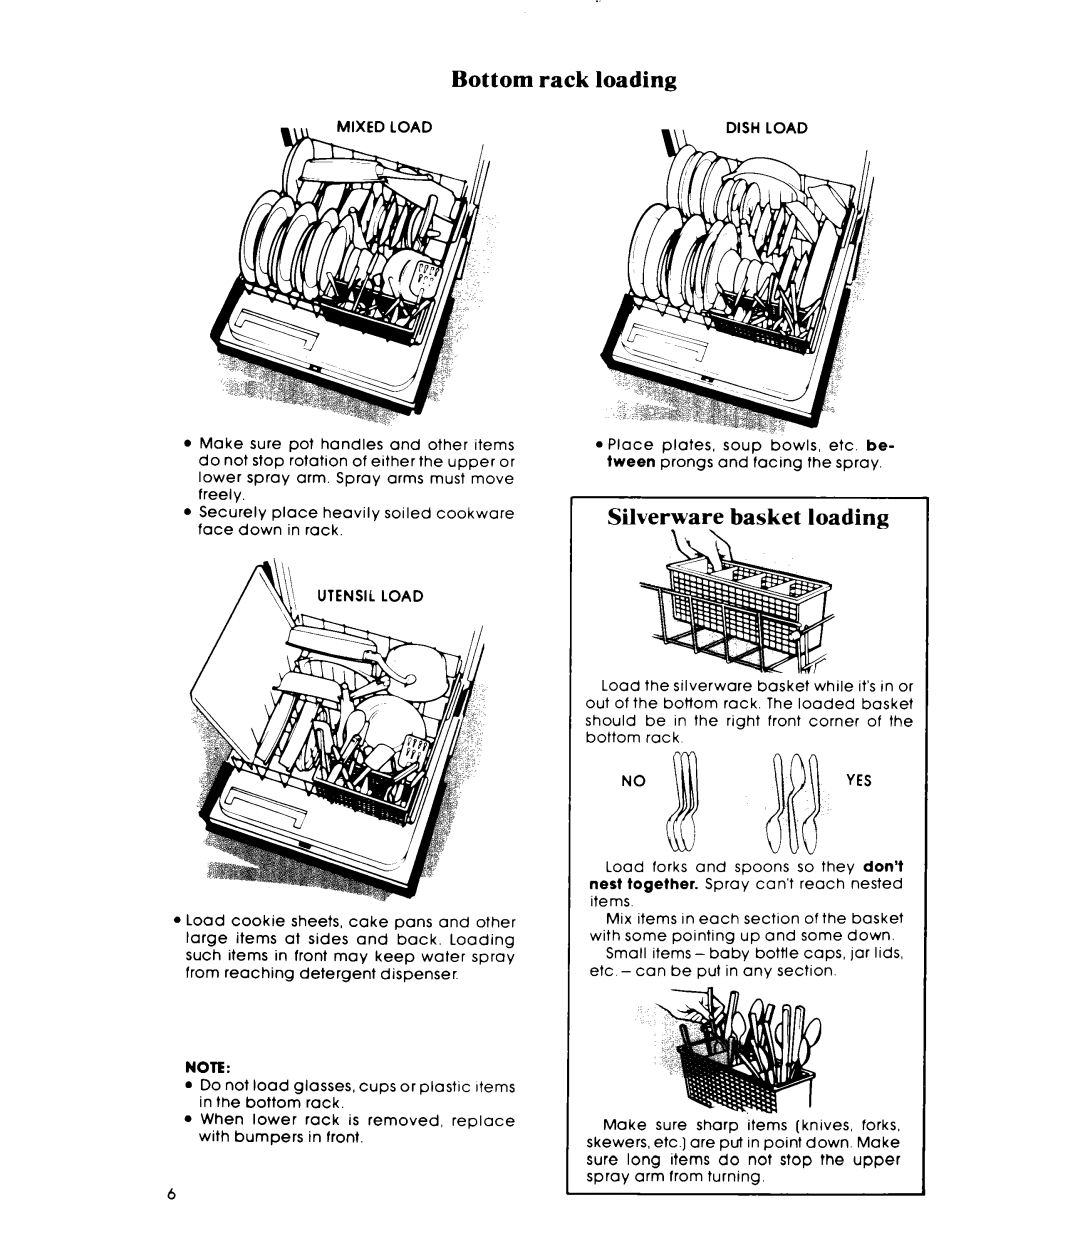 Whirlpool DP3840XP manual Bottom rack loading, Silverware basket loading 